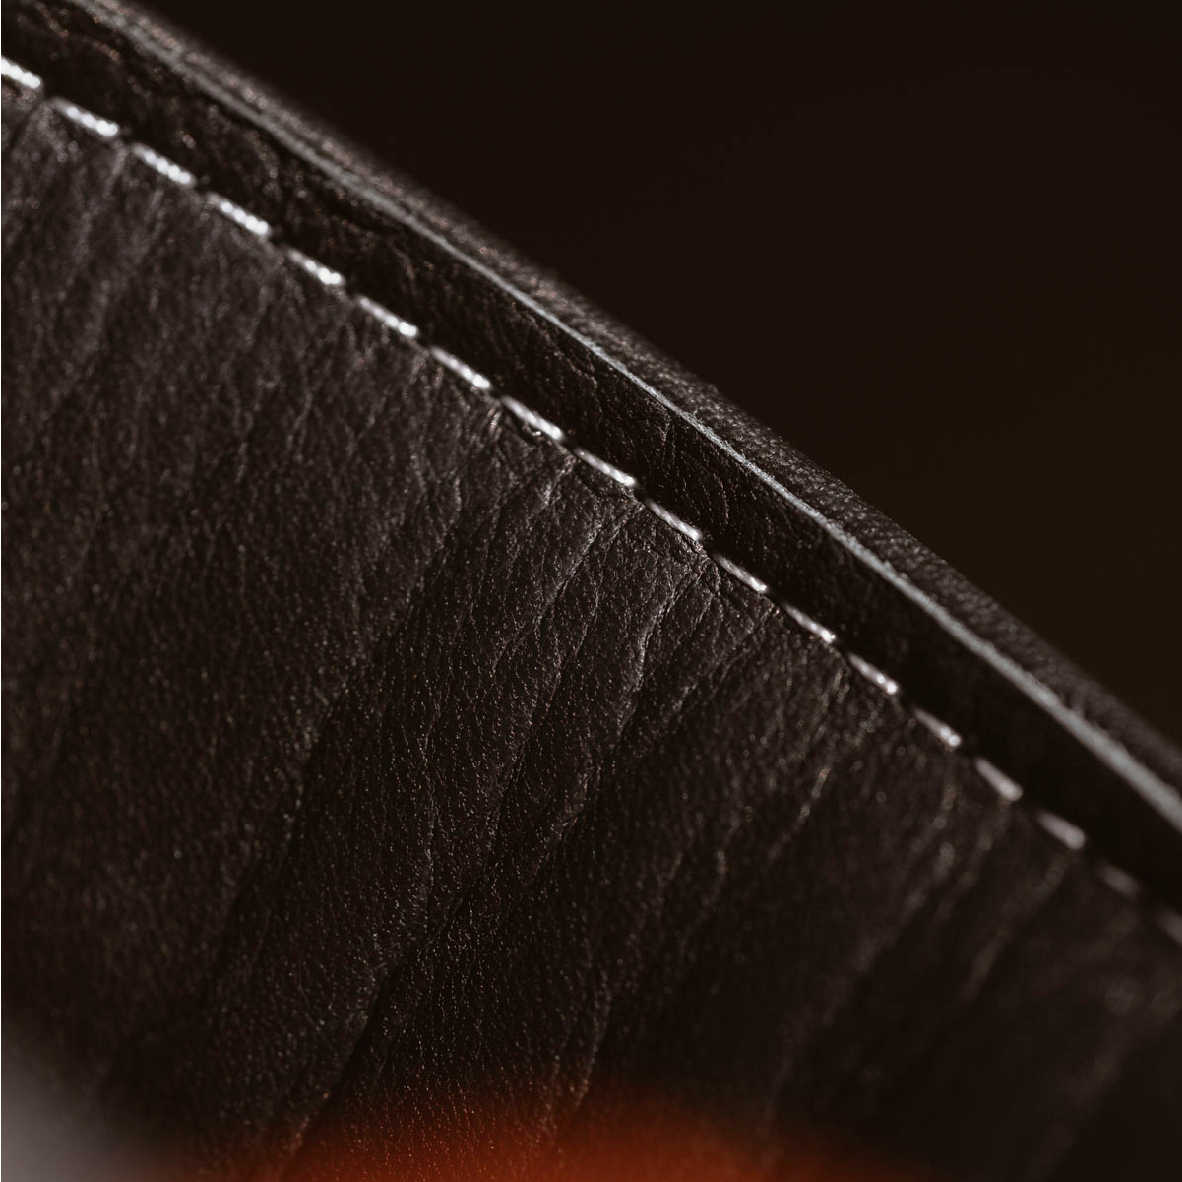 GRADO GS3000x 黃檀木外殼 金屬腔體 52mm大單體 開放式 耳罩式耳機 | 金曲音響